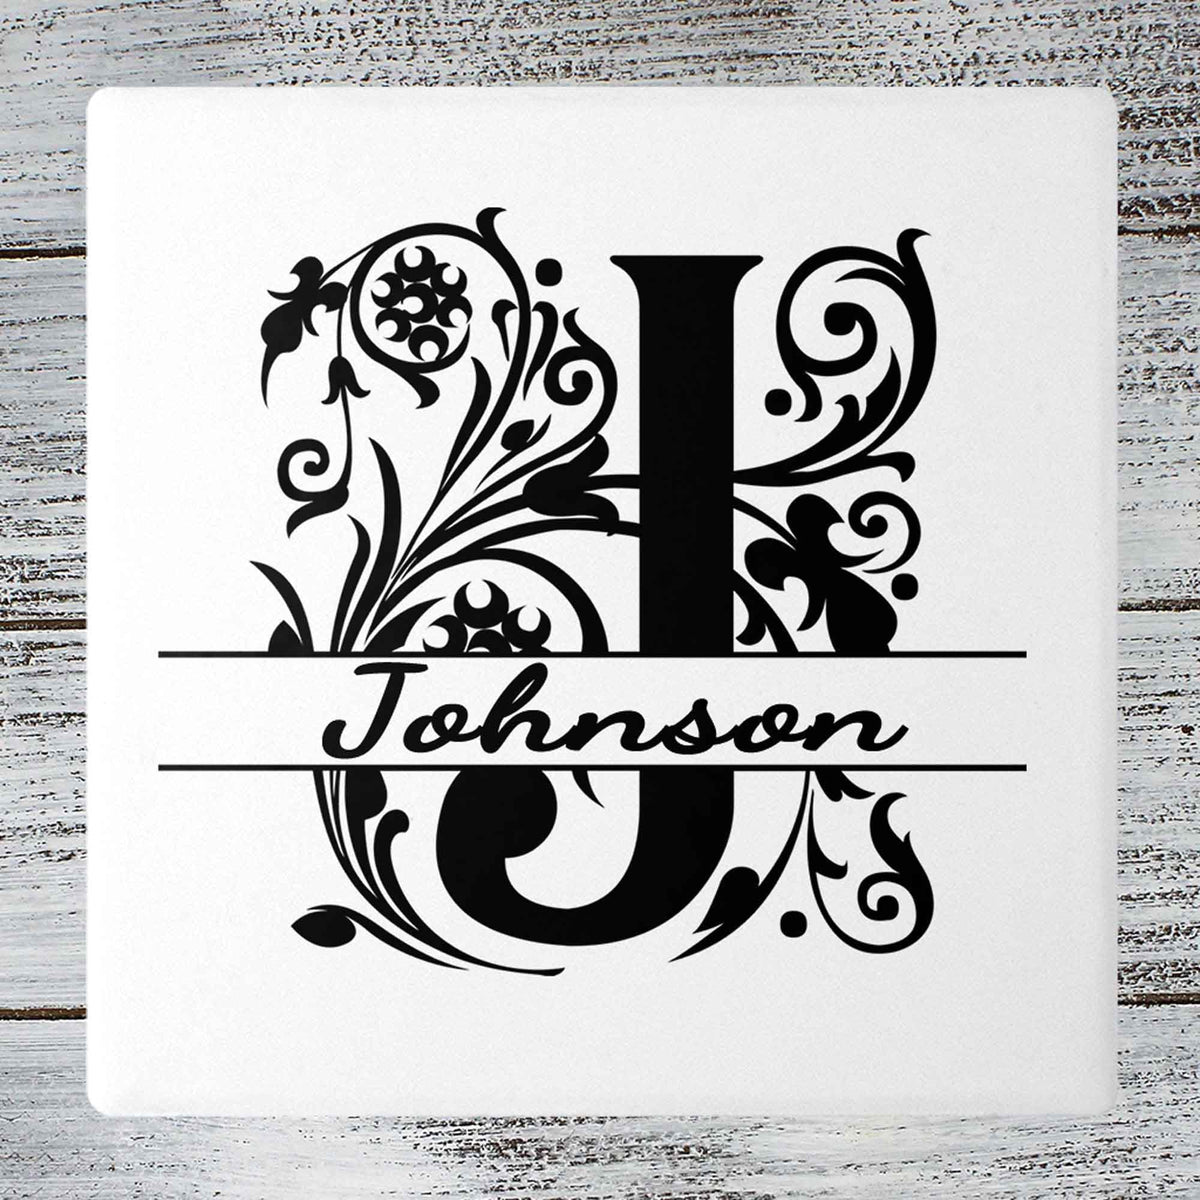 Personalized Coasters | Custom Stone Coaster Set | Regal Floral Monogram | Set of 4